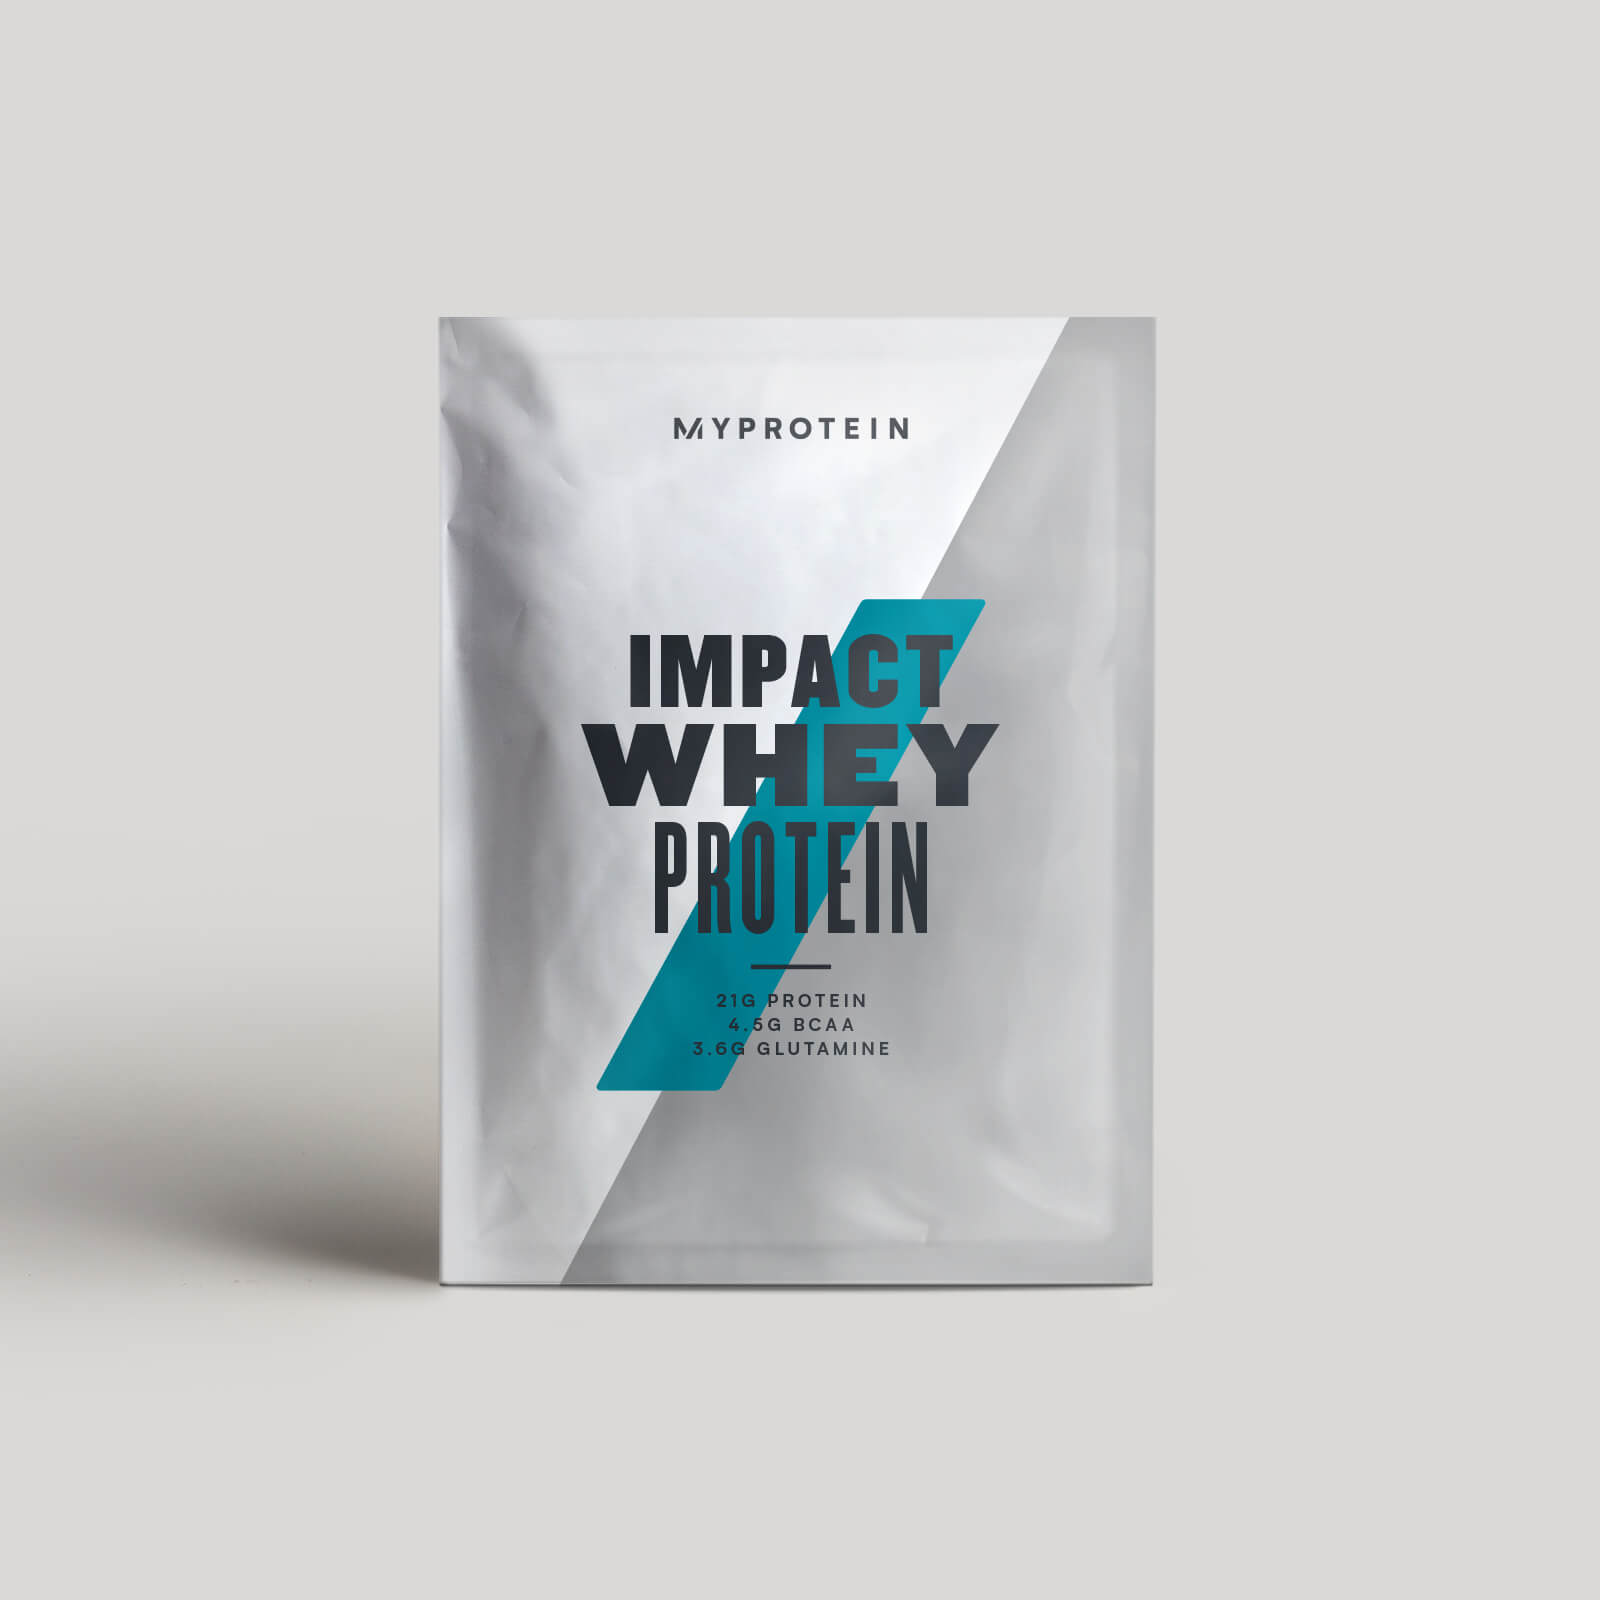 Impact Whey Protein (Amostra) - 25g - Chocolate e menta (stevia)